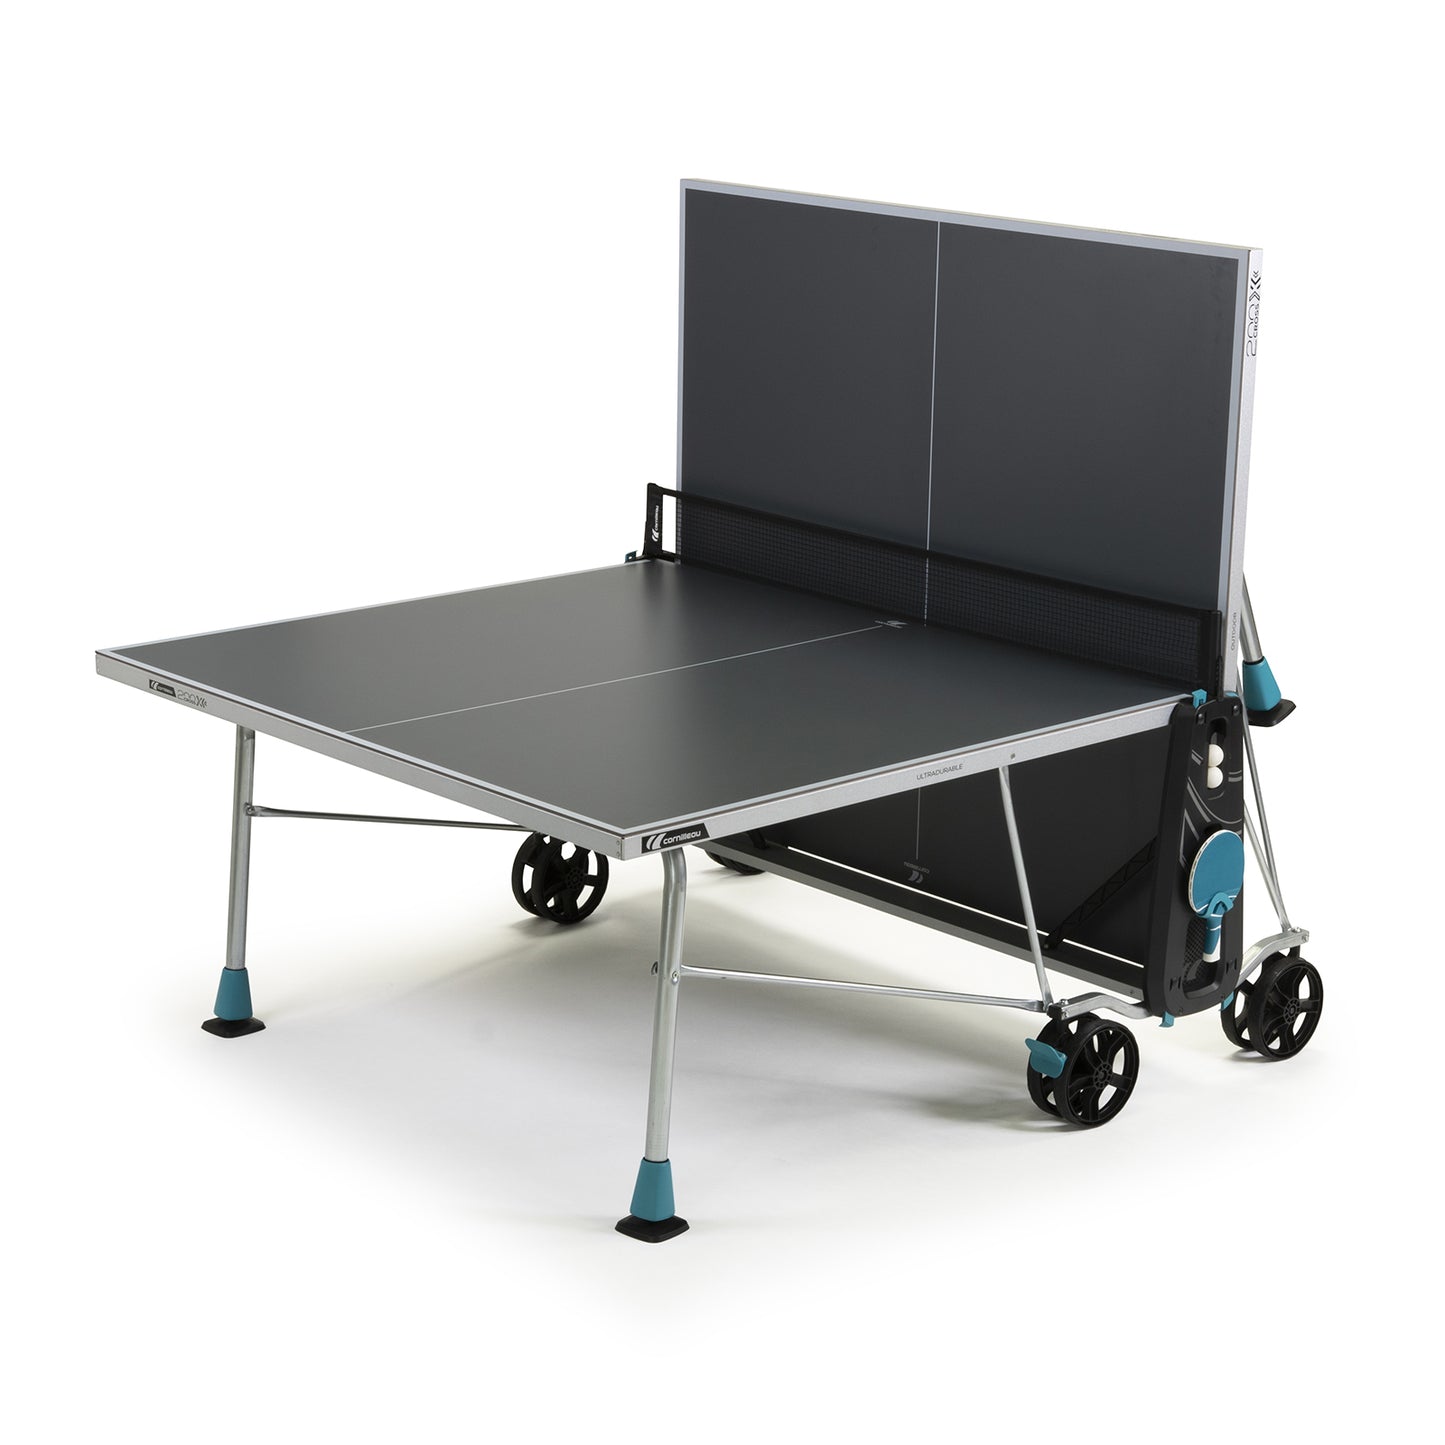 Cornilleau 200X Sport Grey Outdoor Table Tennis Table